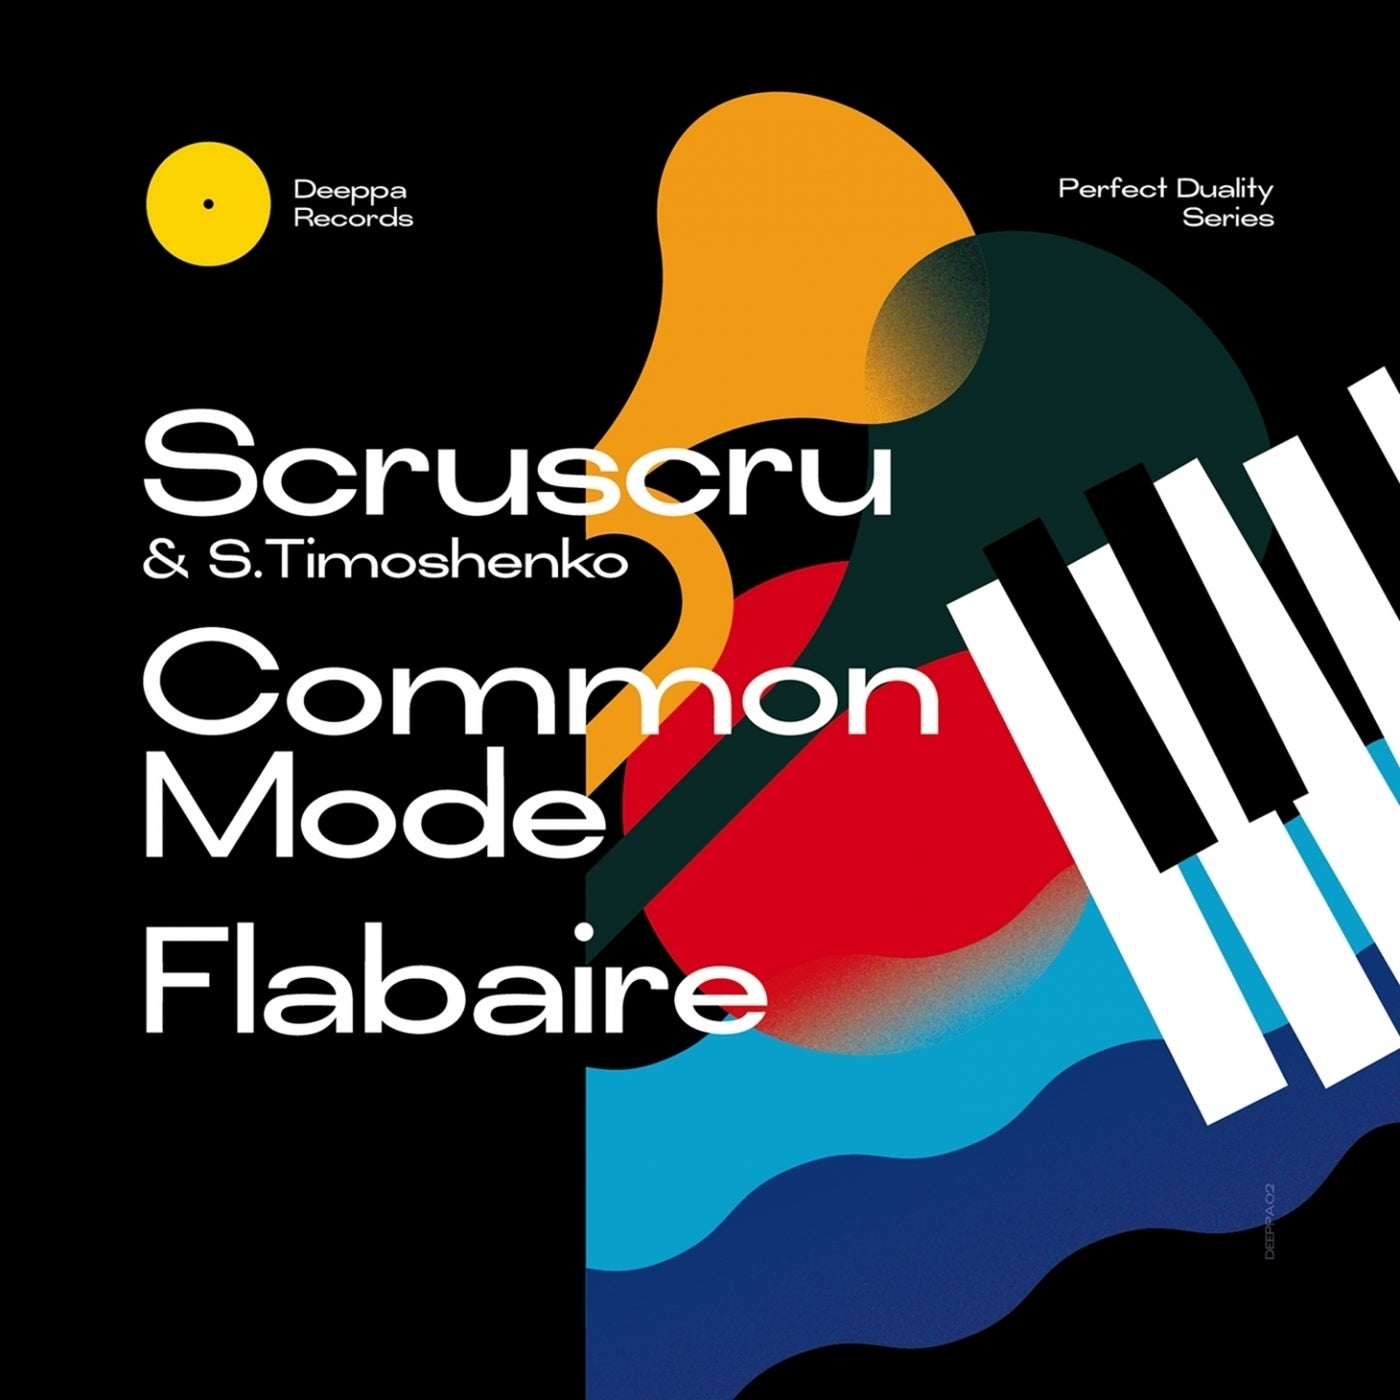 image cover: Scruscru, S.Timoshenko, Common Mode, Flabaire - Perfect Duality Series / DEEPPA002